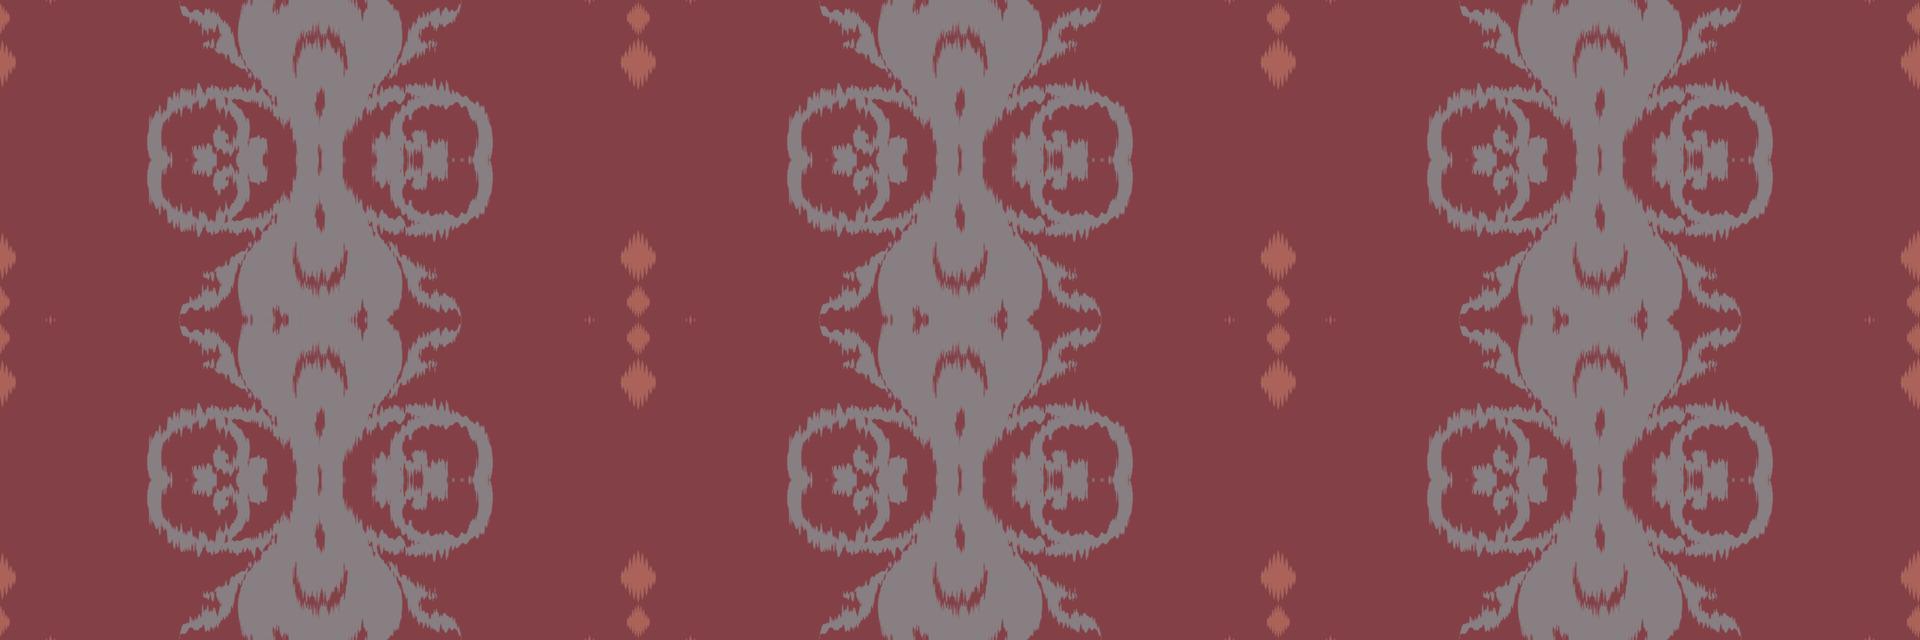 Batik Textile Ethnic ikat floral seamless pattern digital vector design for Print saree Kurti Borneo Fabric border brush symbols swatches stylish